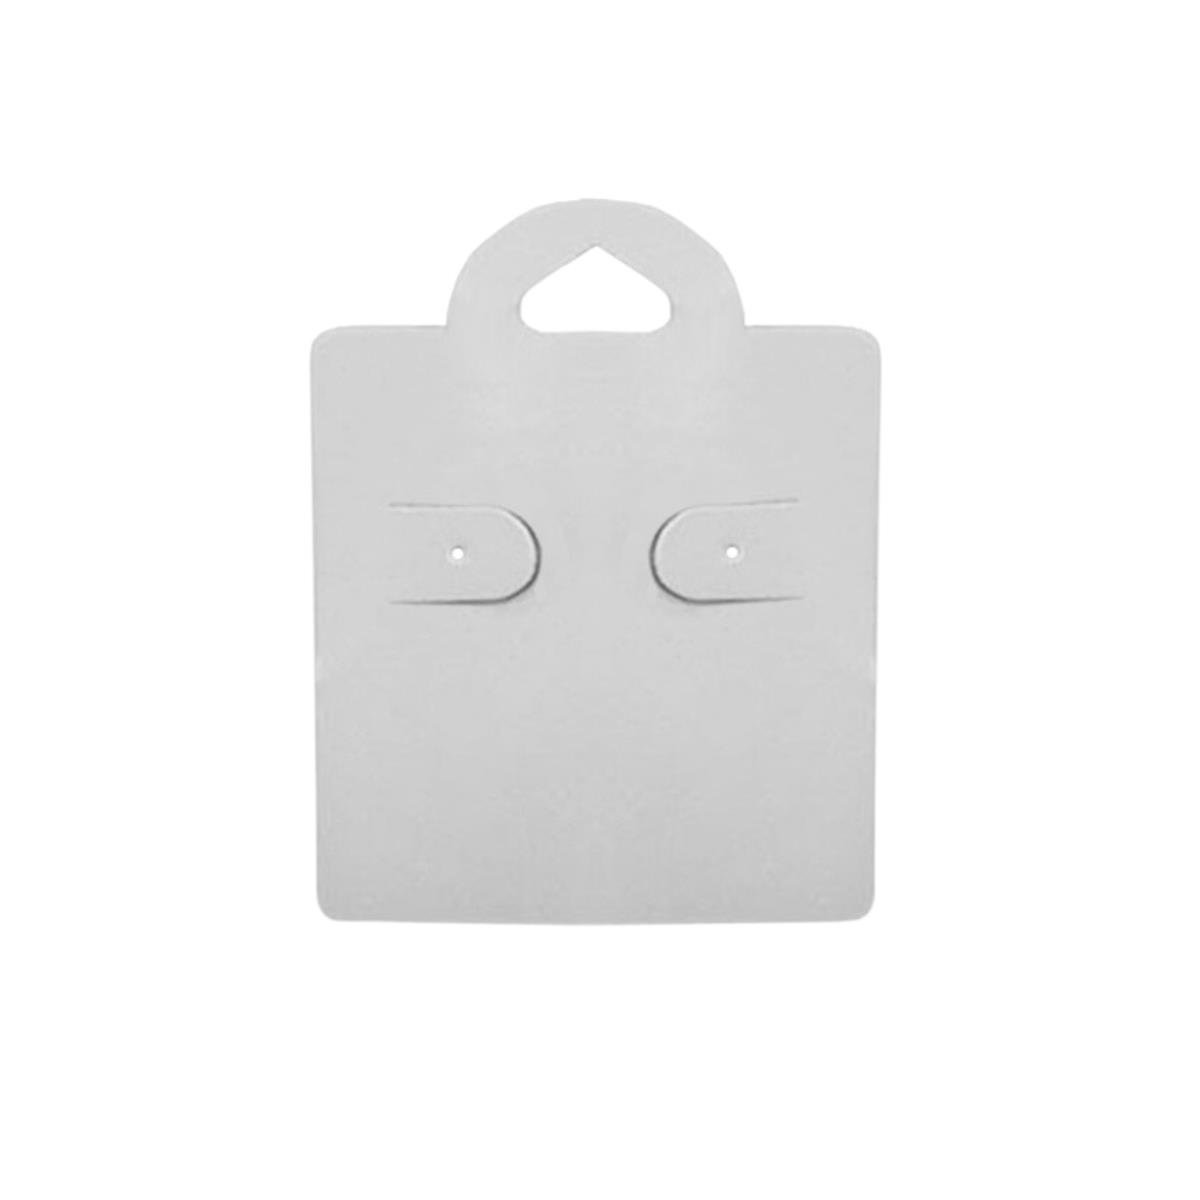 Cartela Para Brinco 5,5X4 cm Retangular Pct 100 - Branco